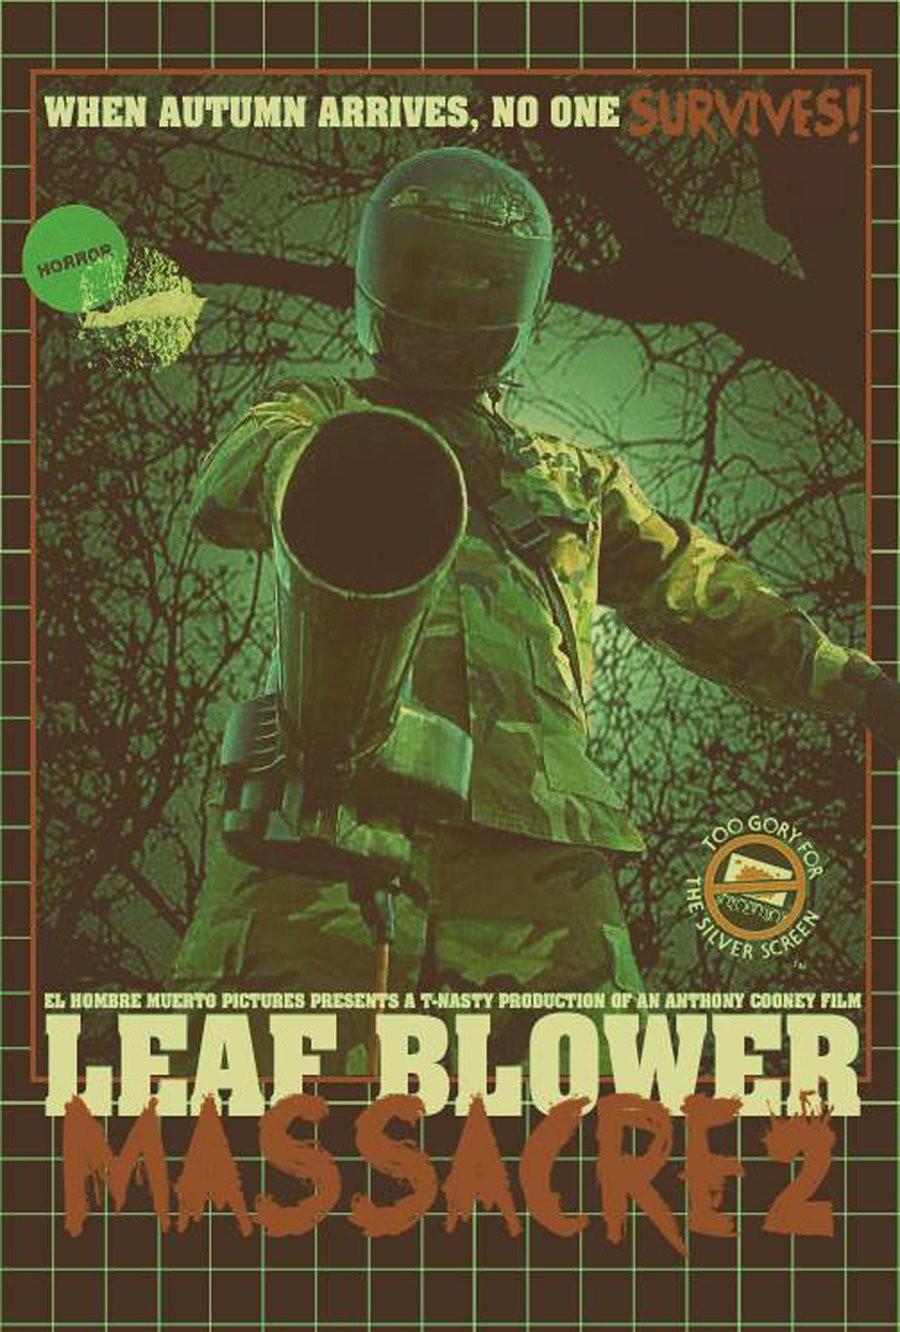 Leaf Blower Massacre 2